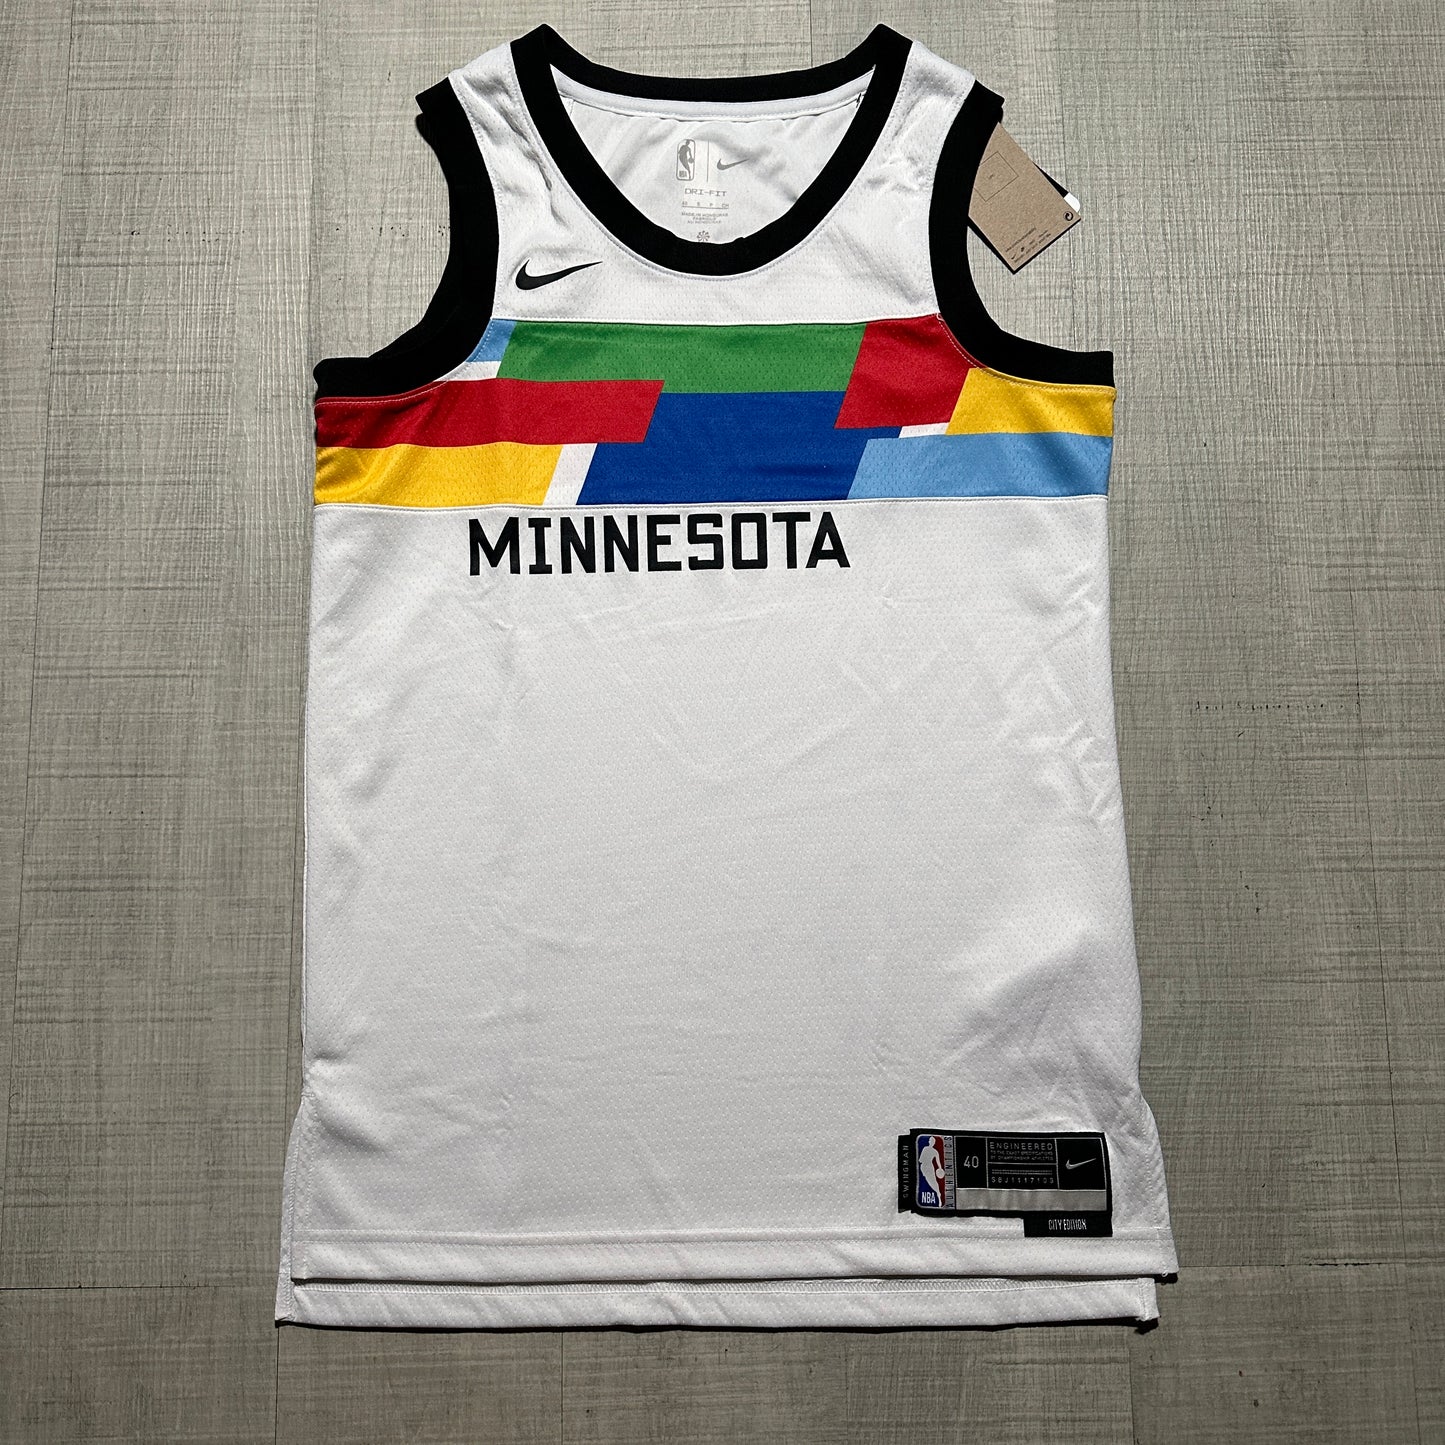 Minnesota Timberwolves City Edition Nike Jersey